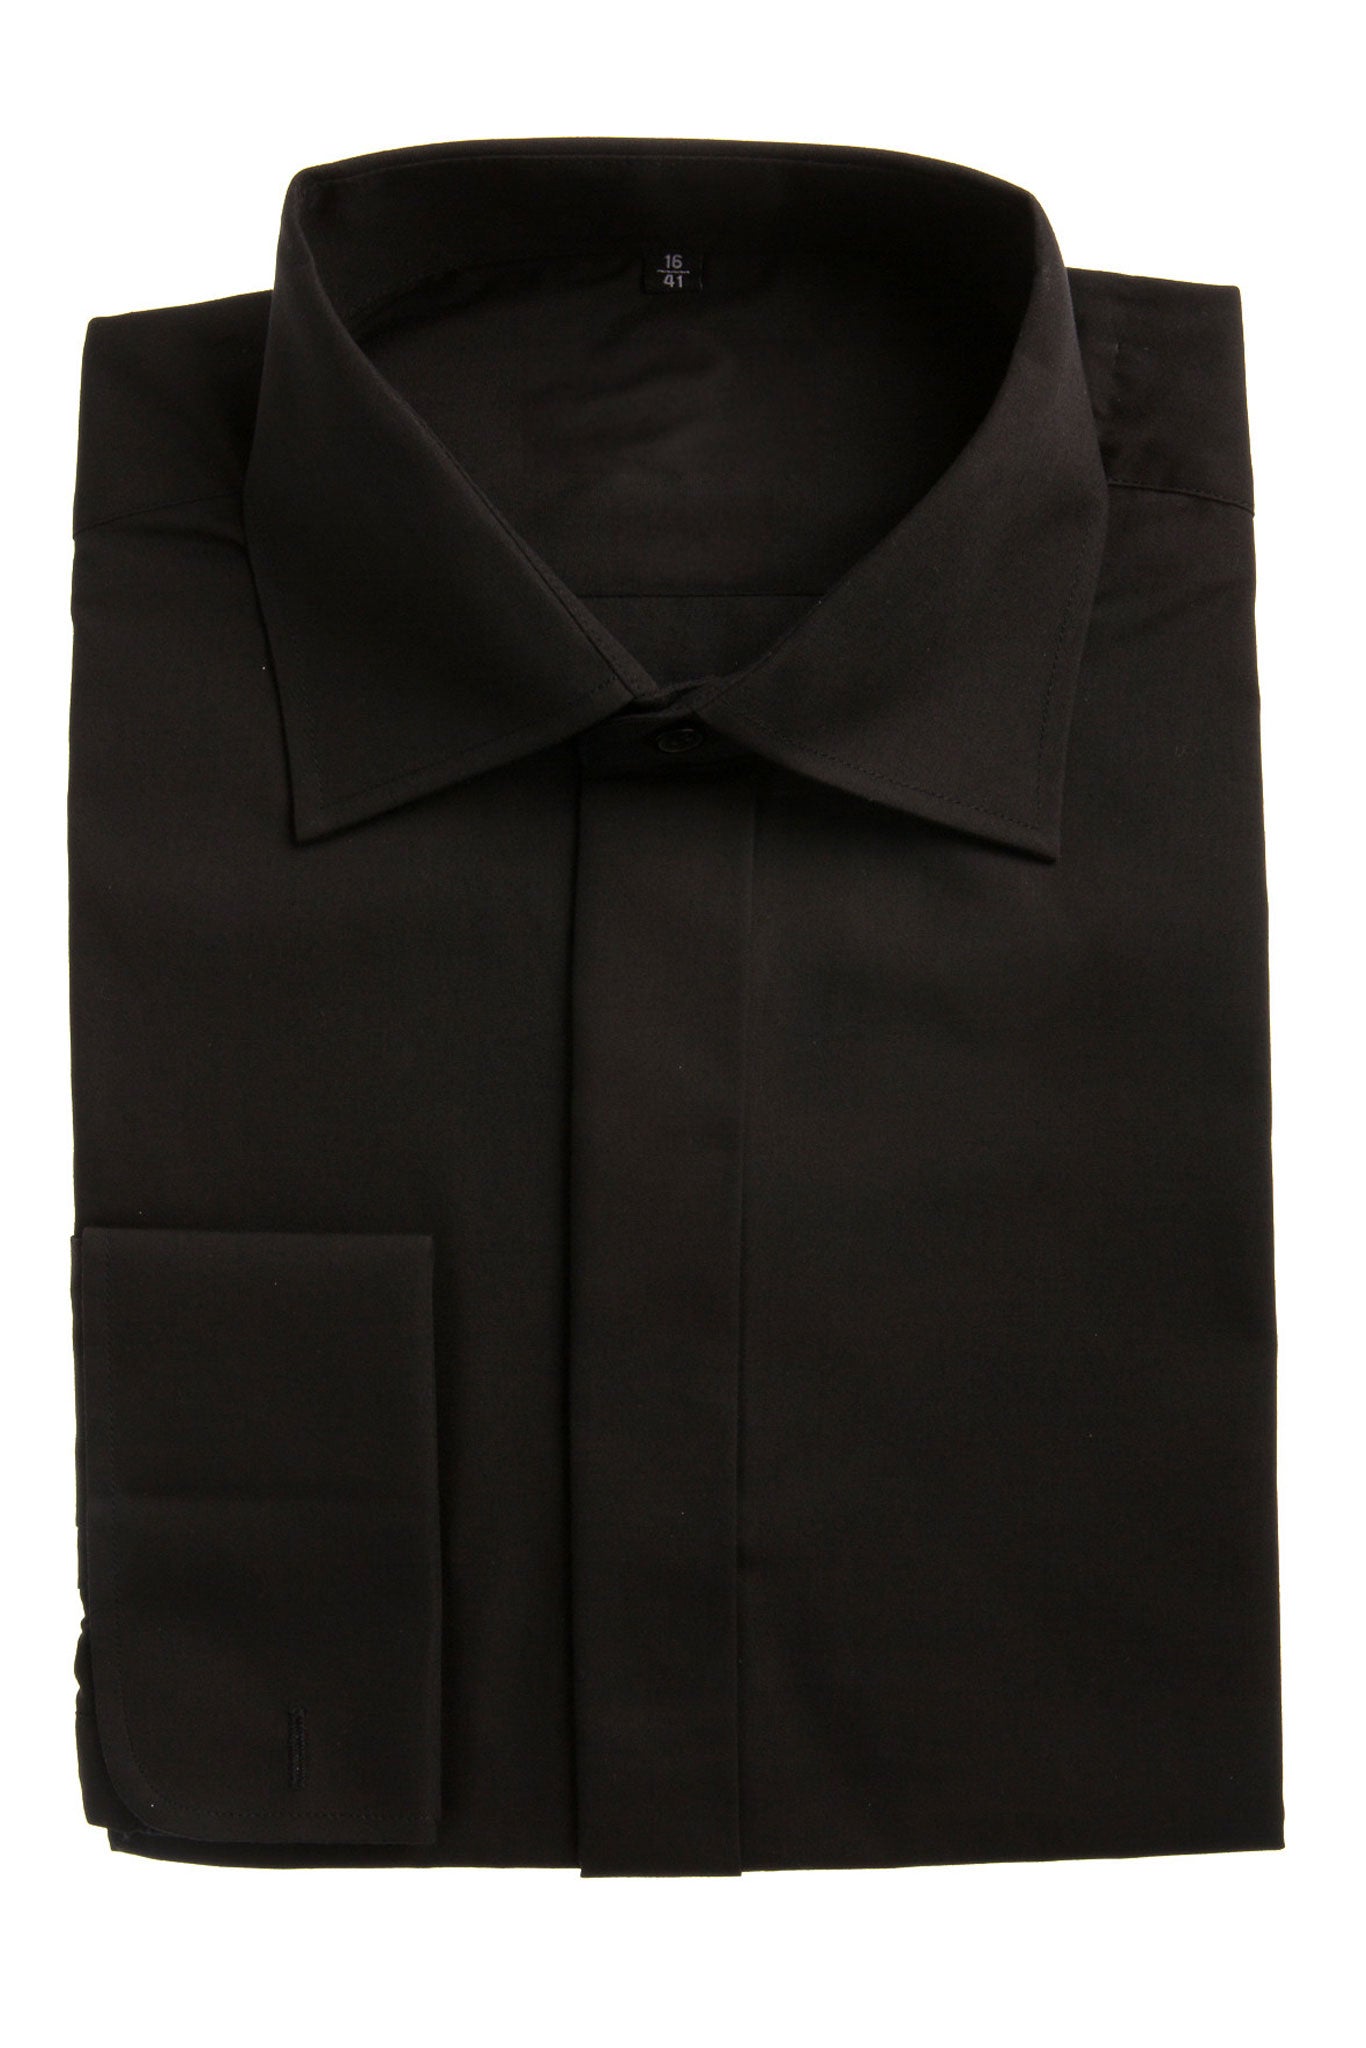 Men's Black Formal Cotton Work Shirt